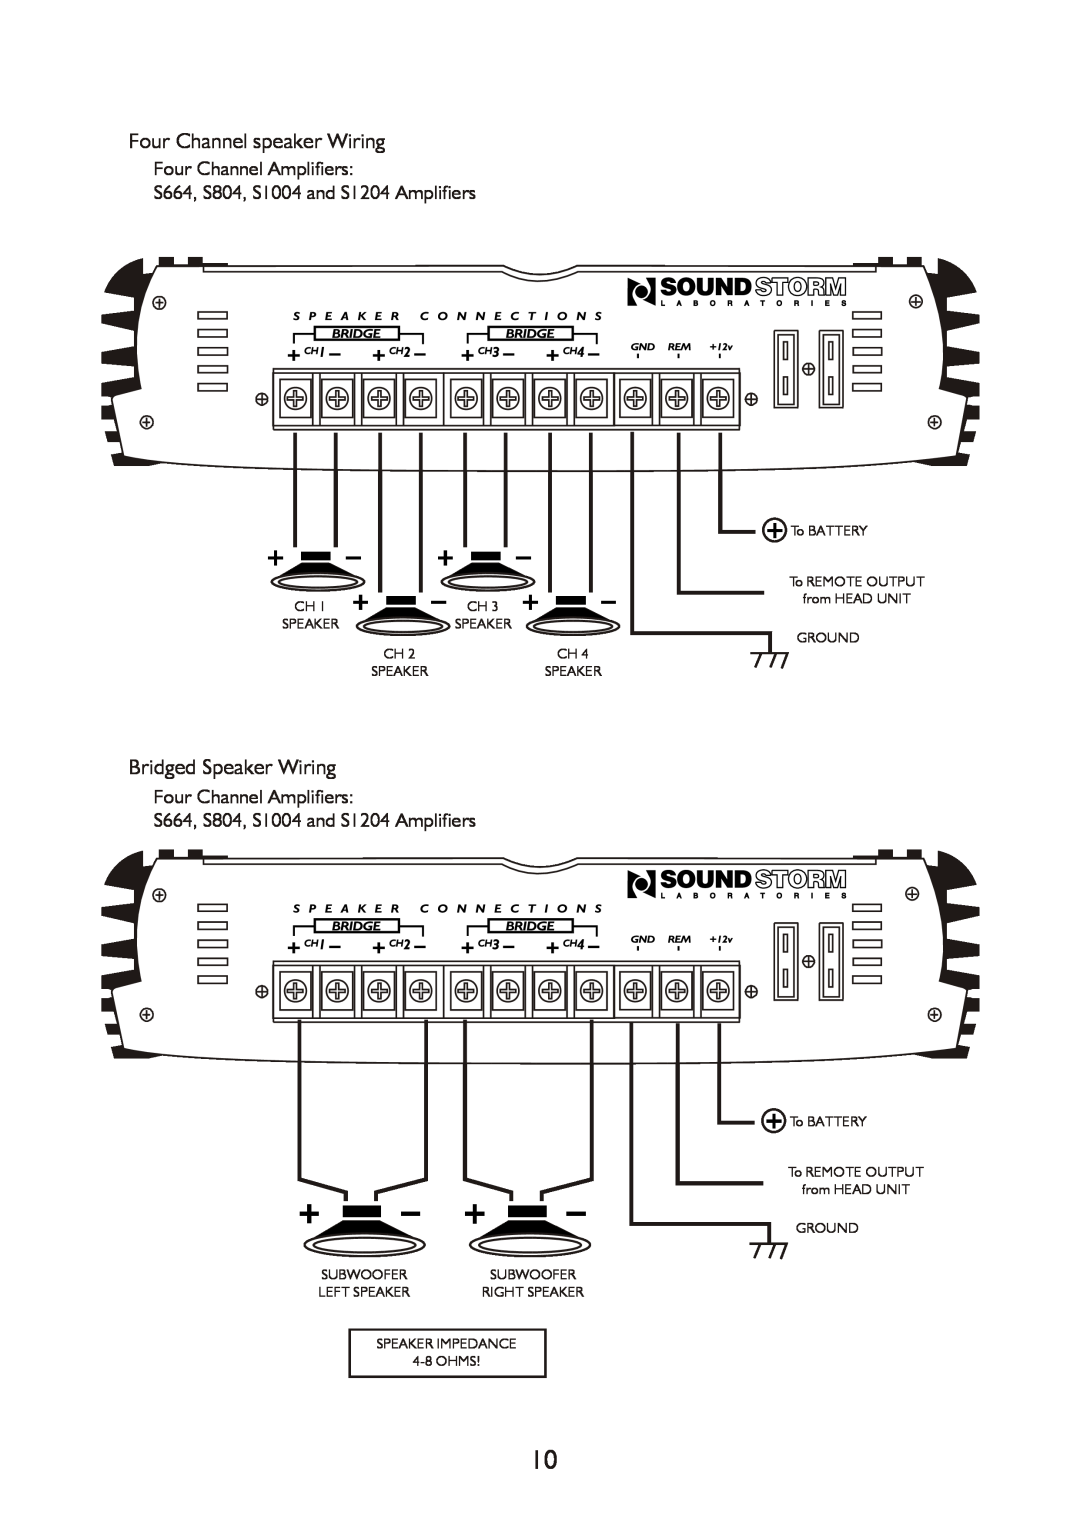 Sound Storm Laboratories Amplifiers manual Four Channel speaker Wiring, Bridged Speaker Wiring 